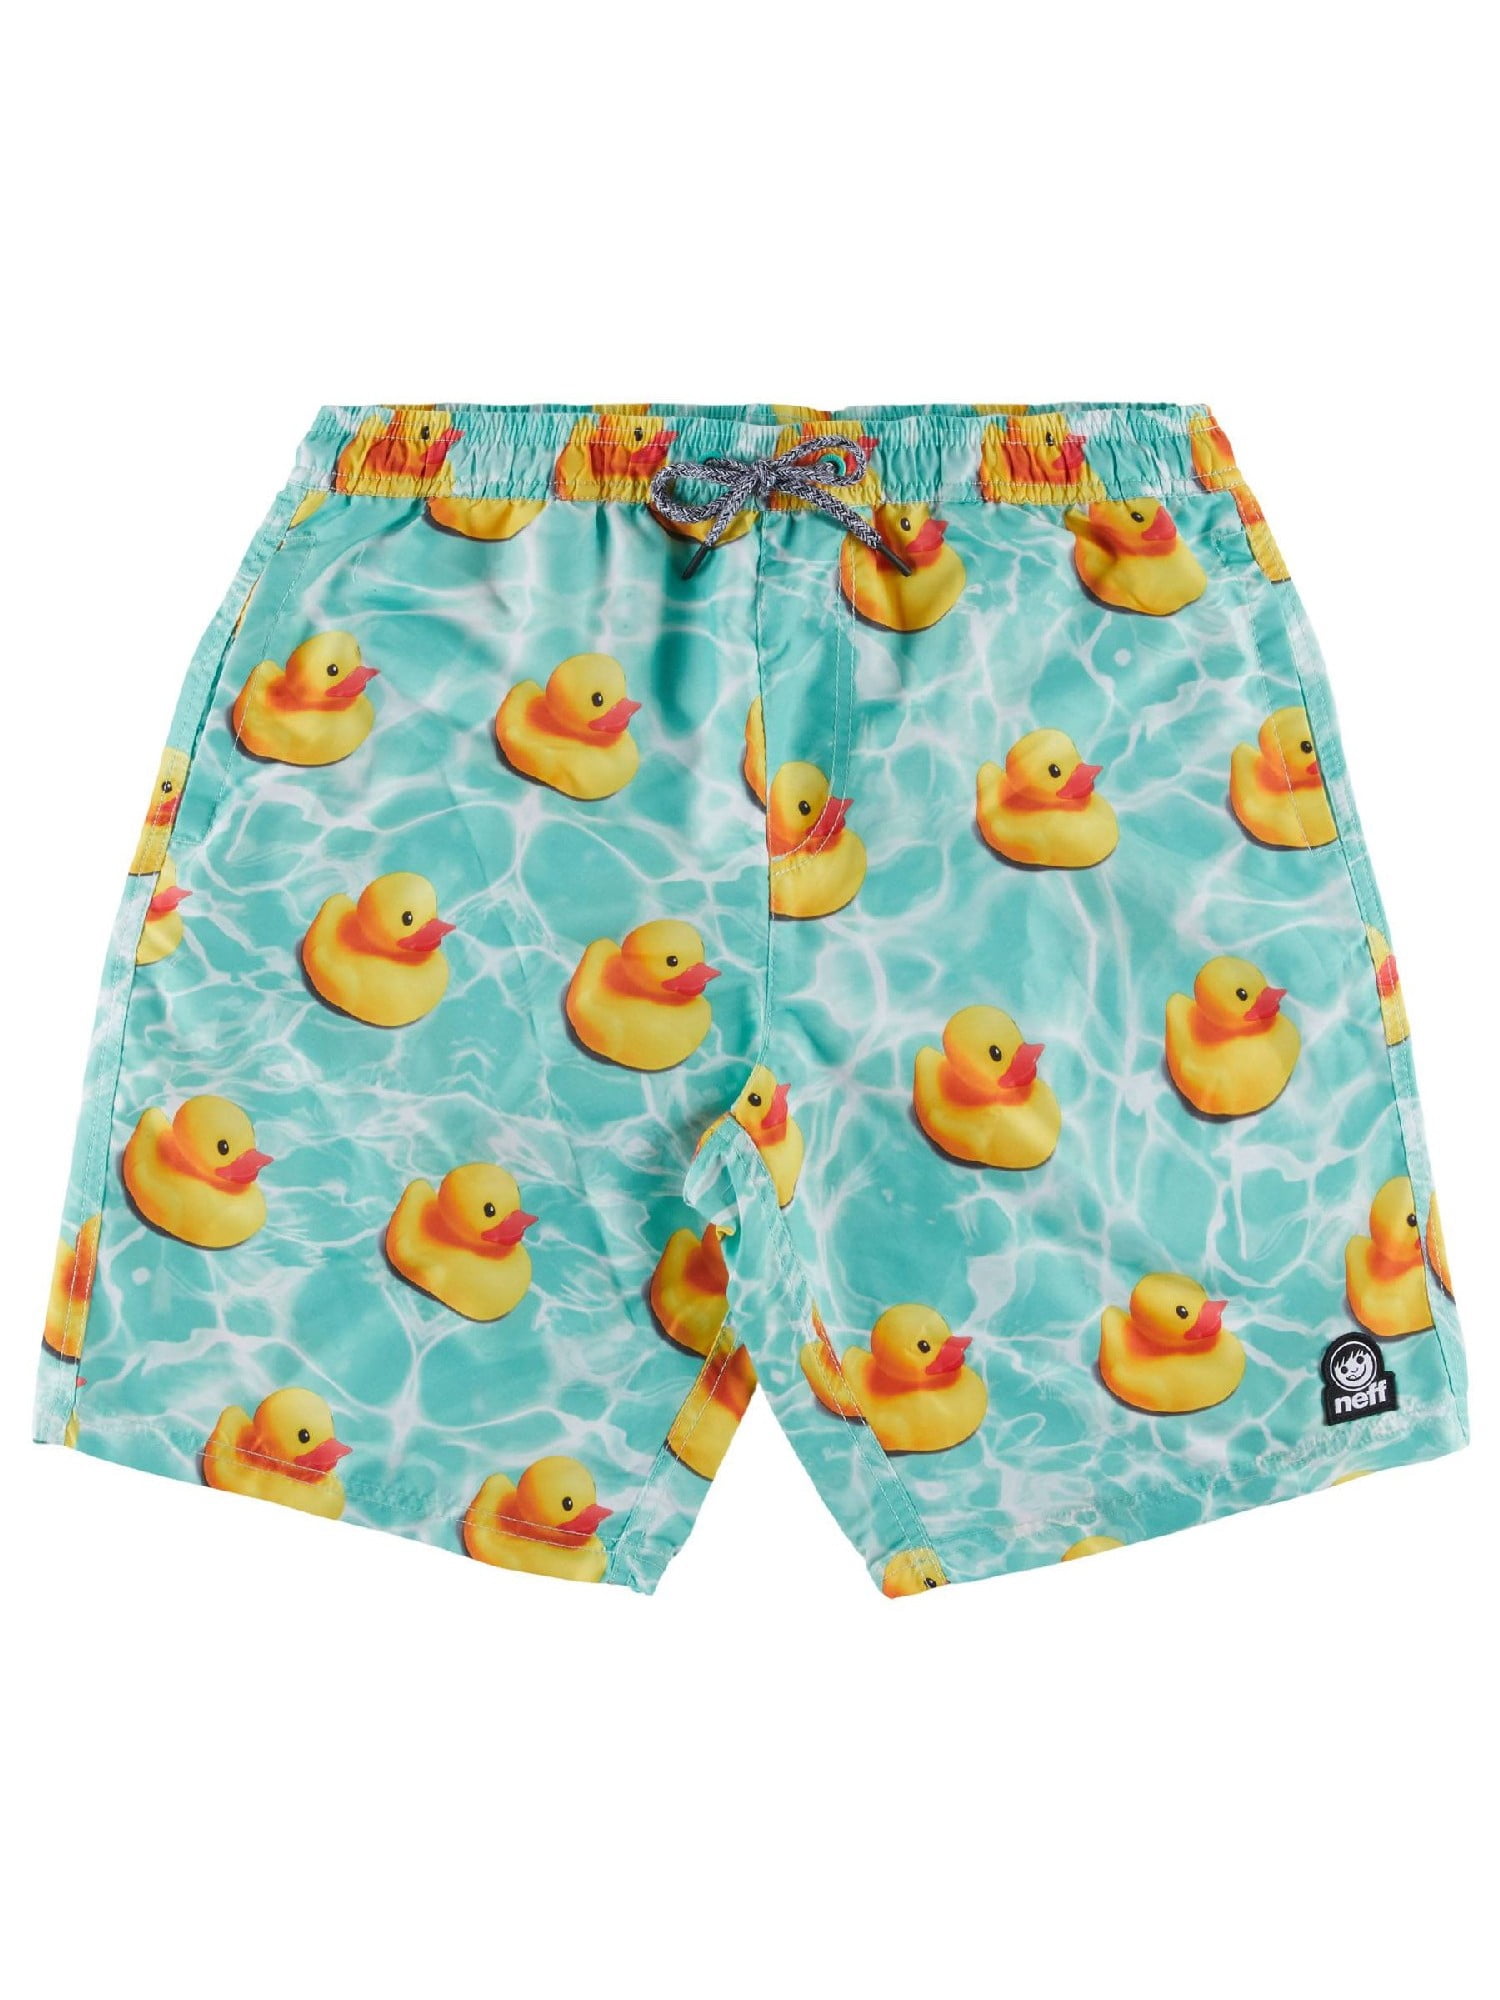 NEFF Mens Ducky Hot Tub Swim Surf Shorts 